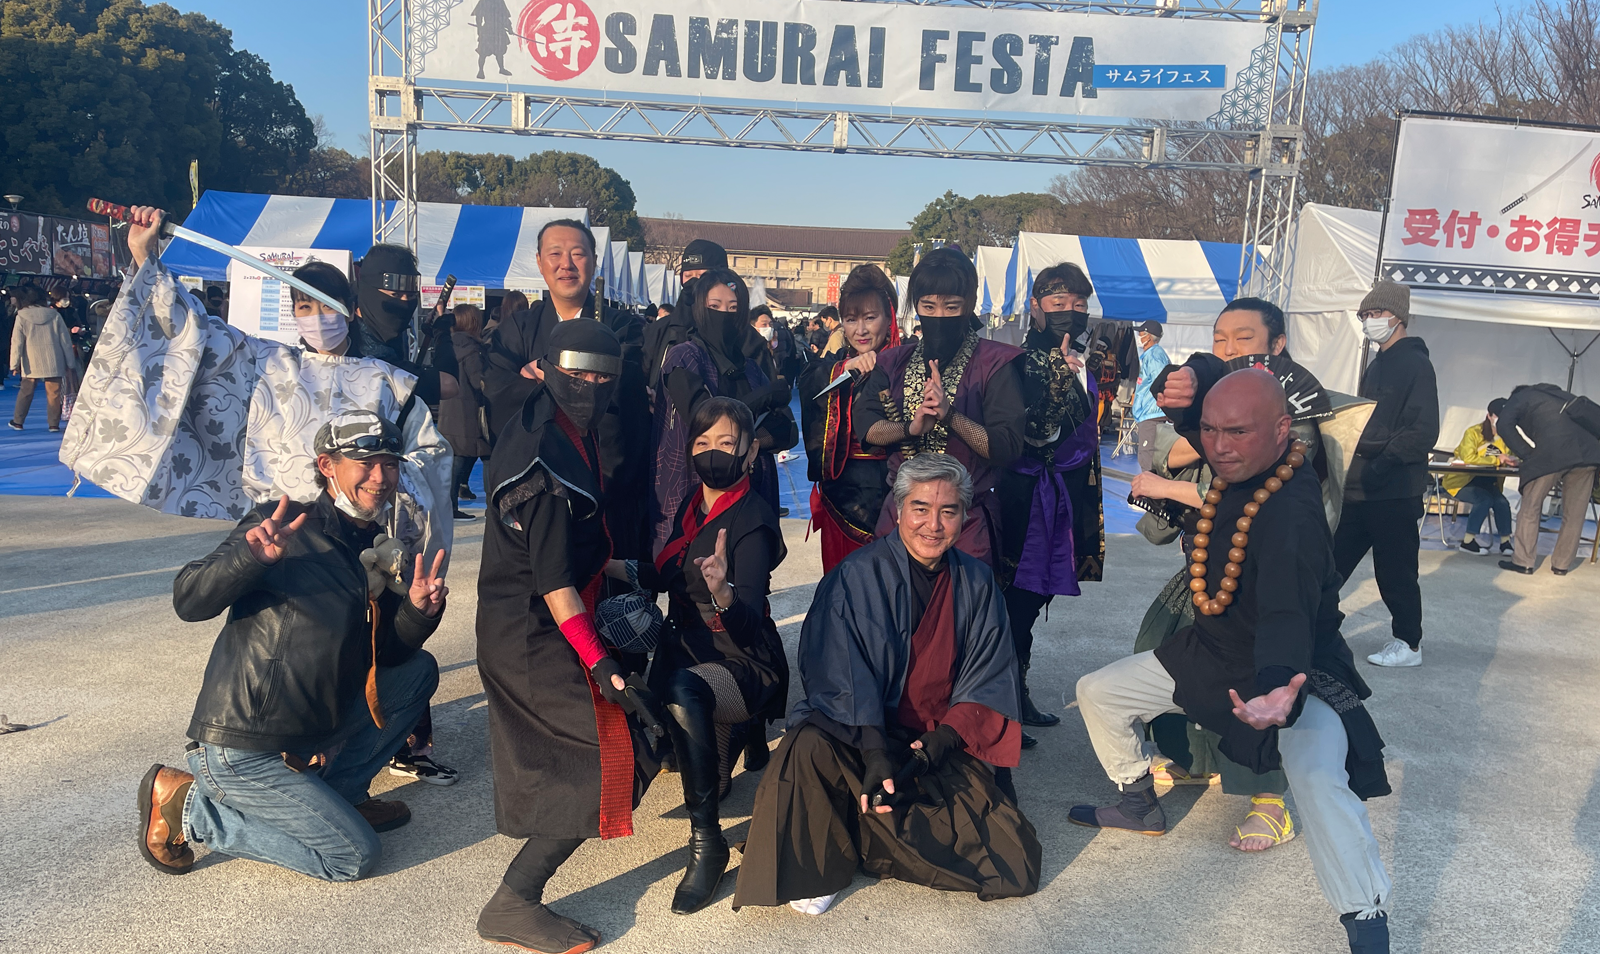 samurai-themed event